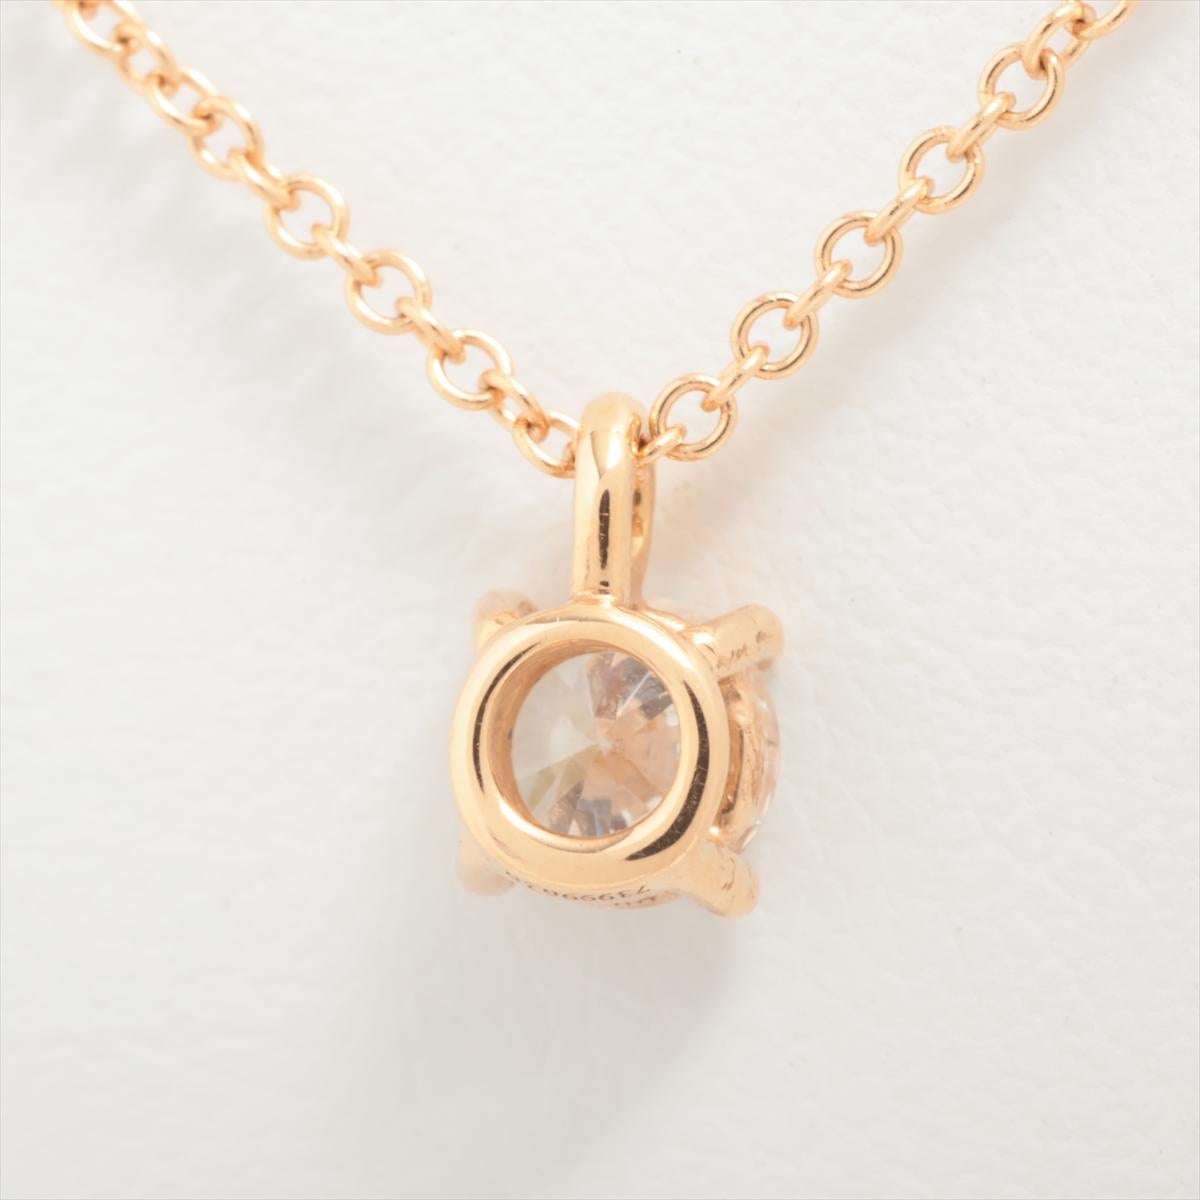  Tiffany Solitaire Diamond Necklace  2